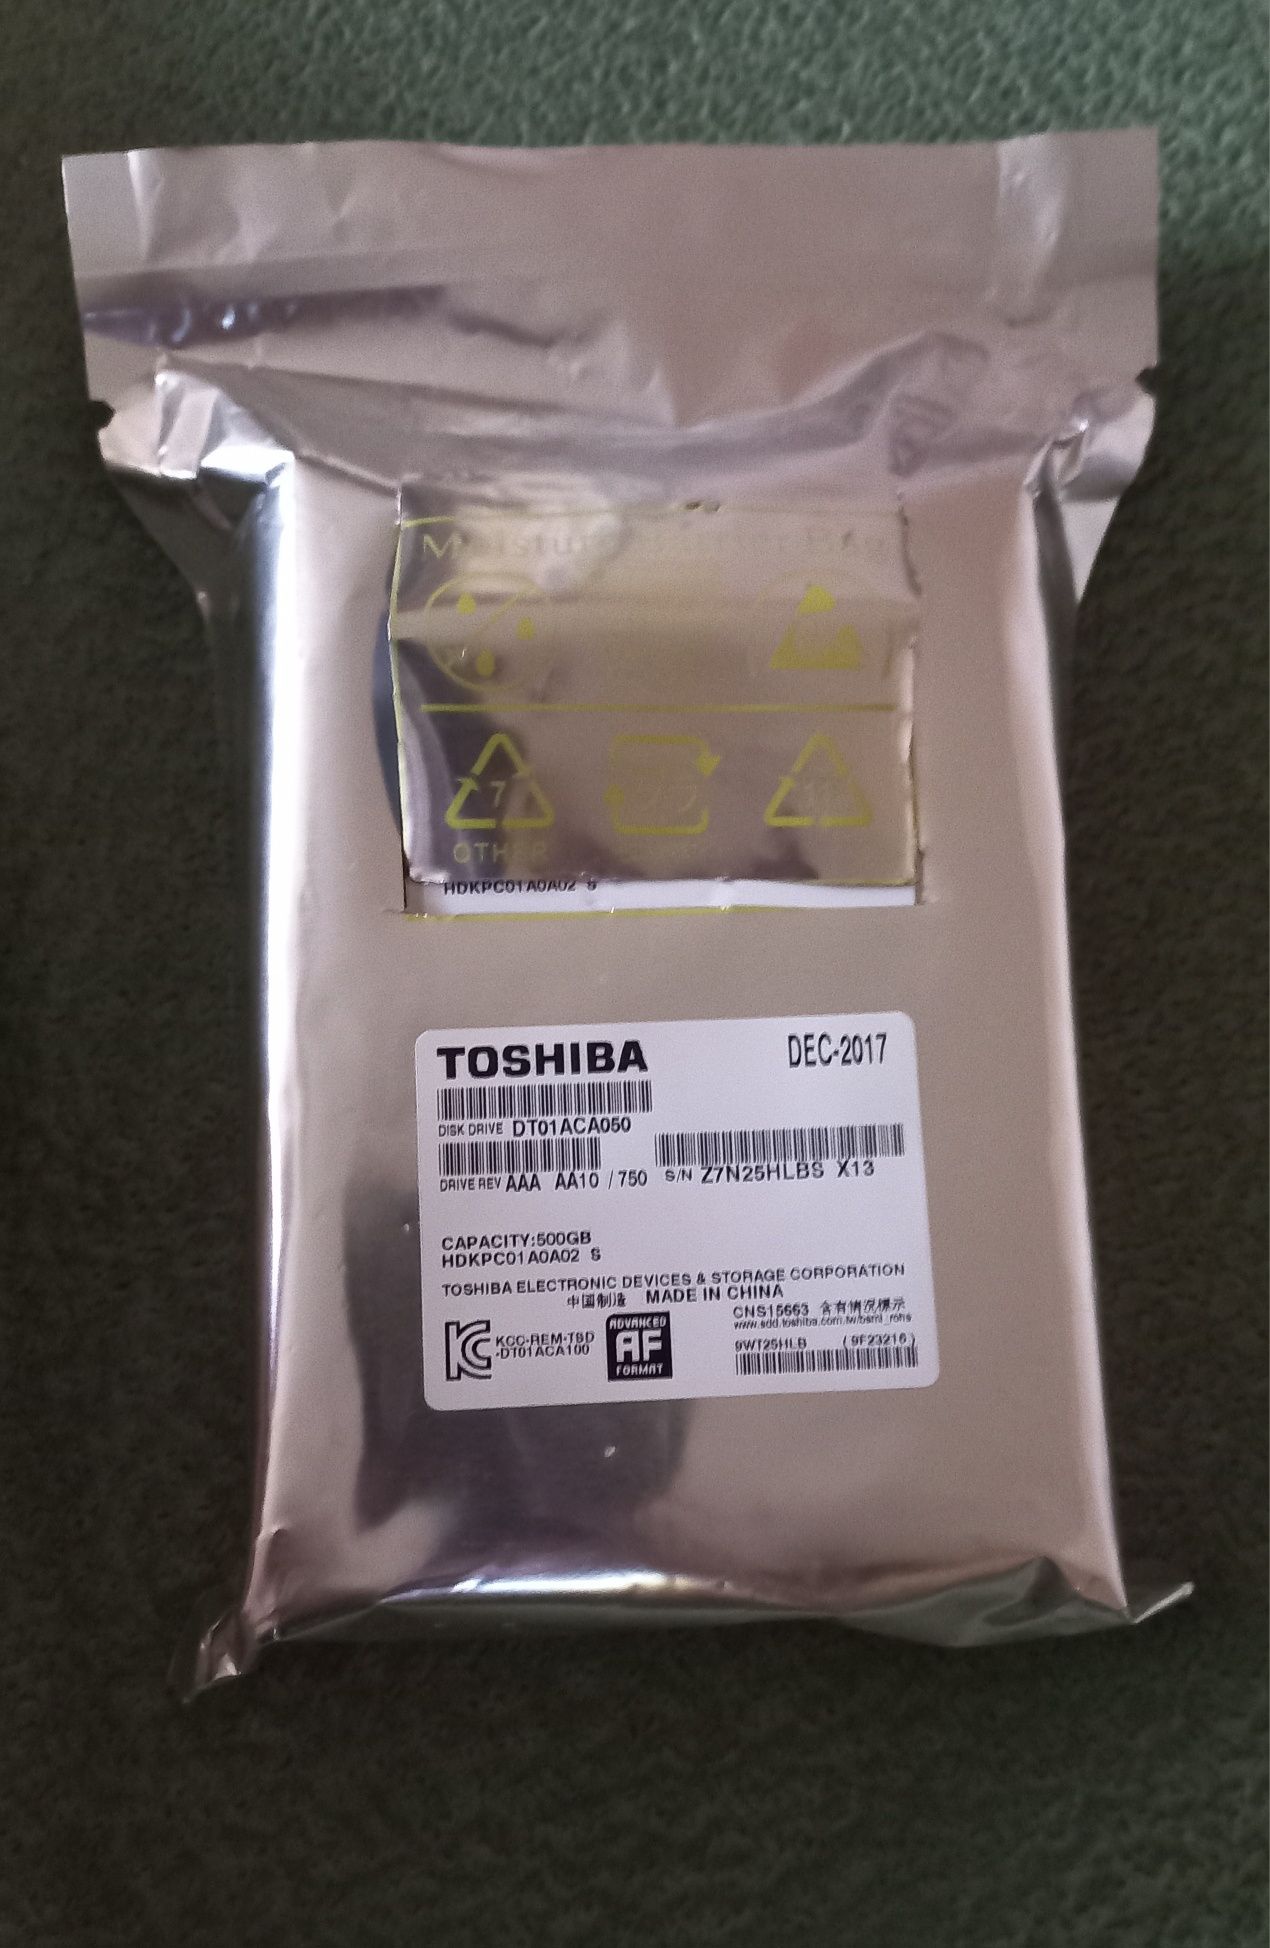 Жесткий диск Toshiba